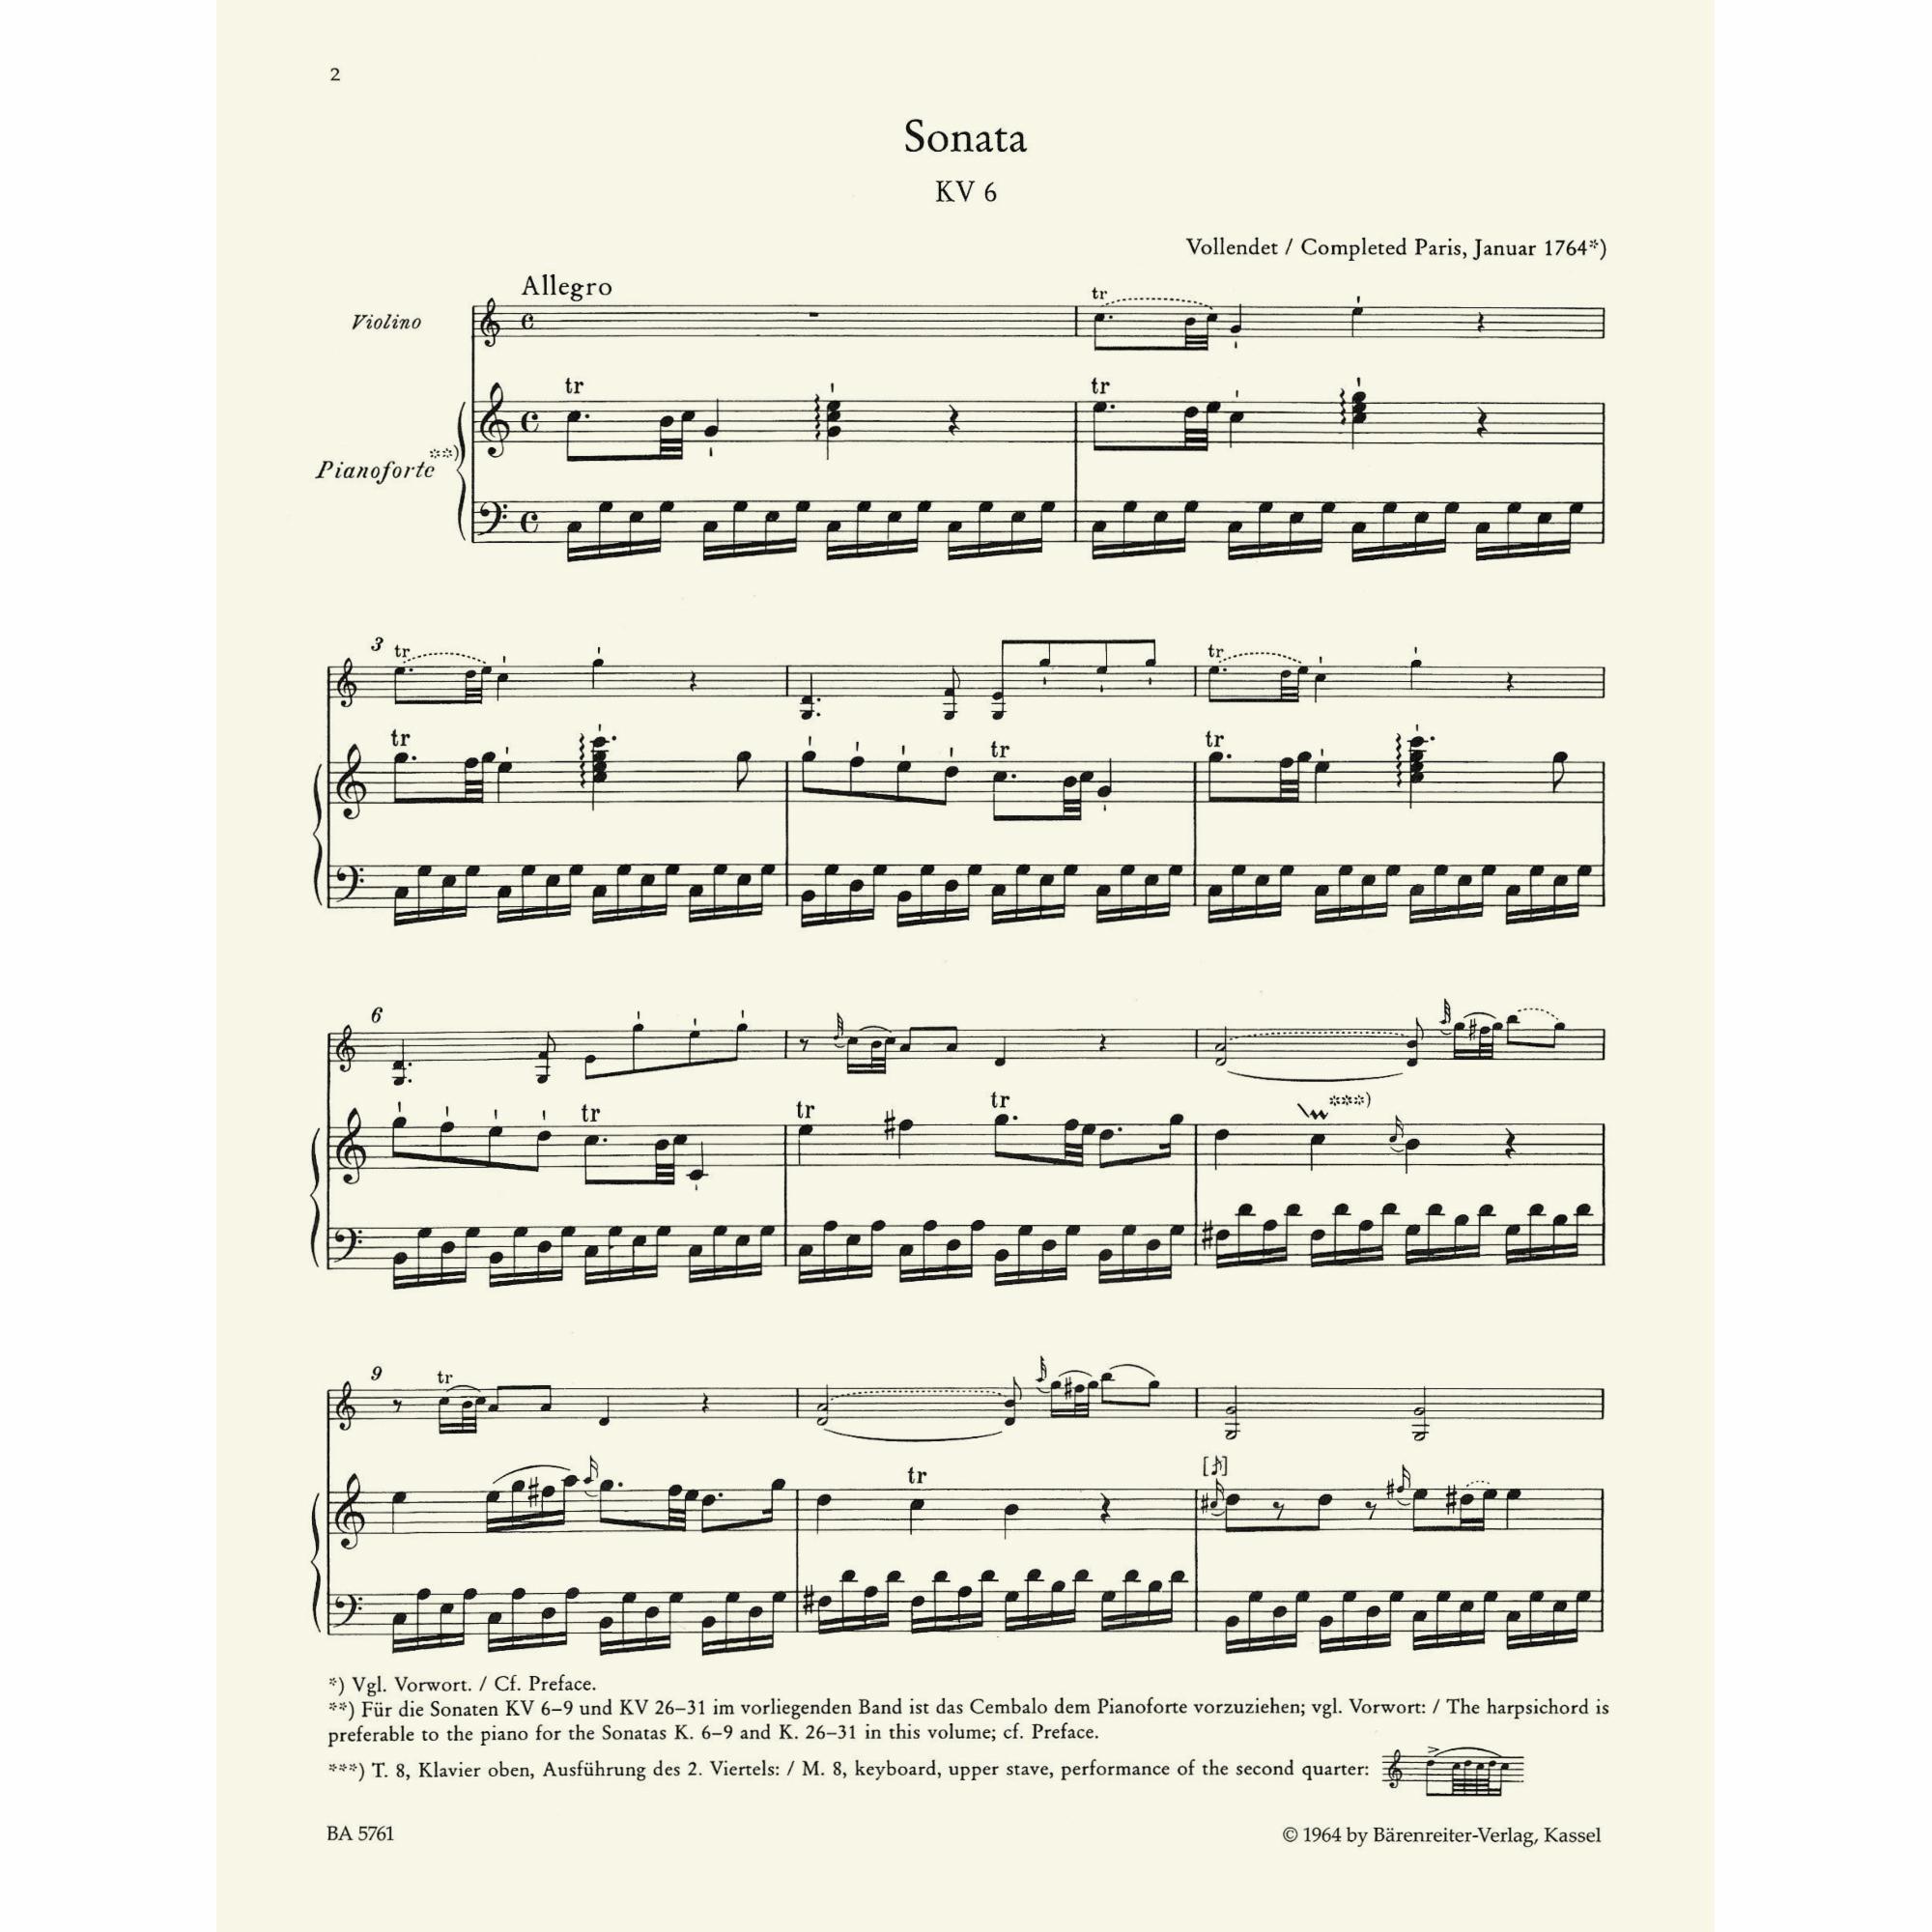 Sample: Vol. I, Piano (Pg. 2)